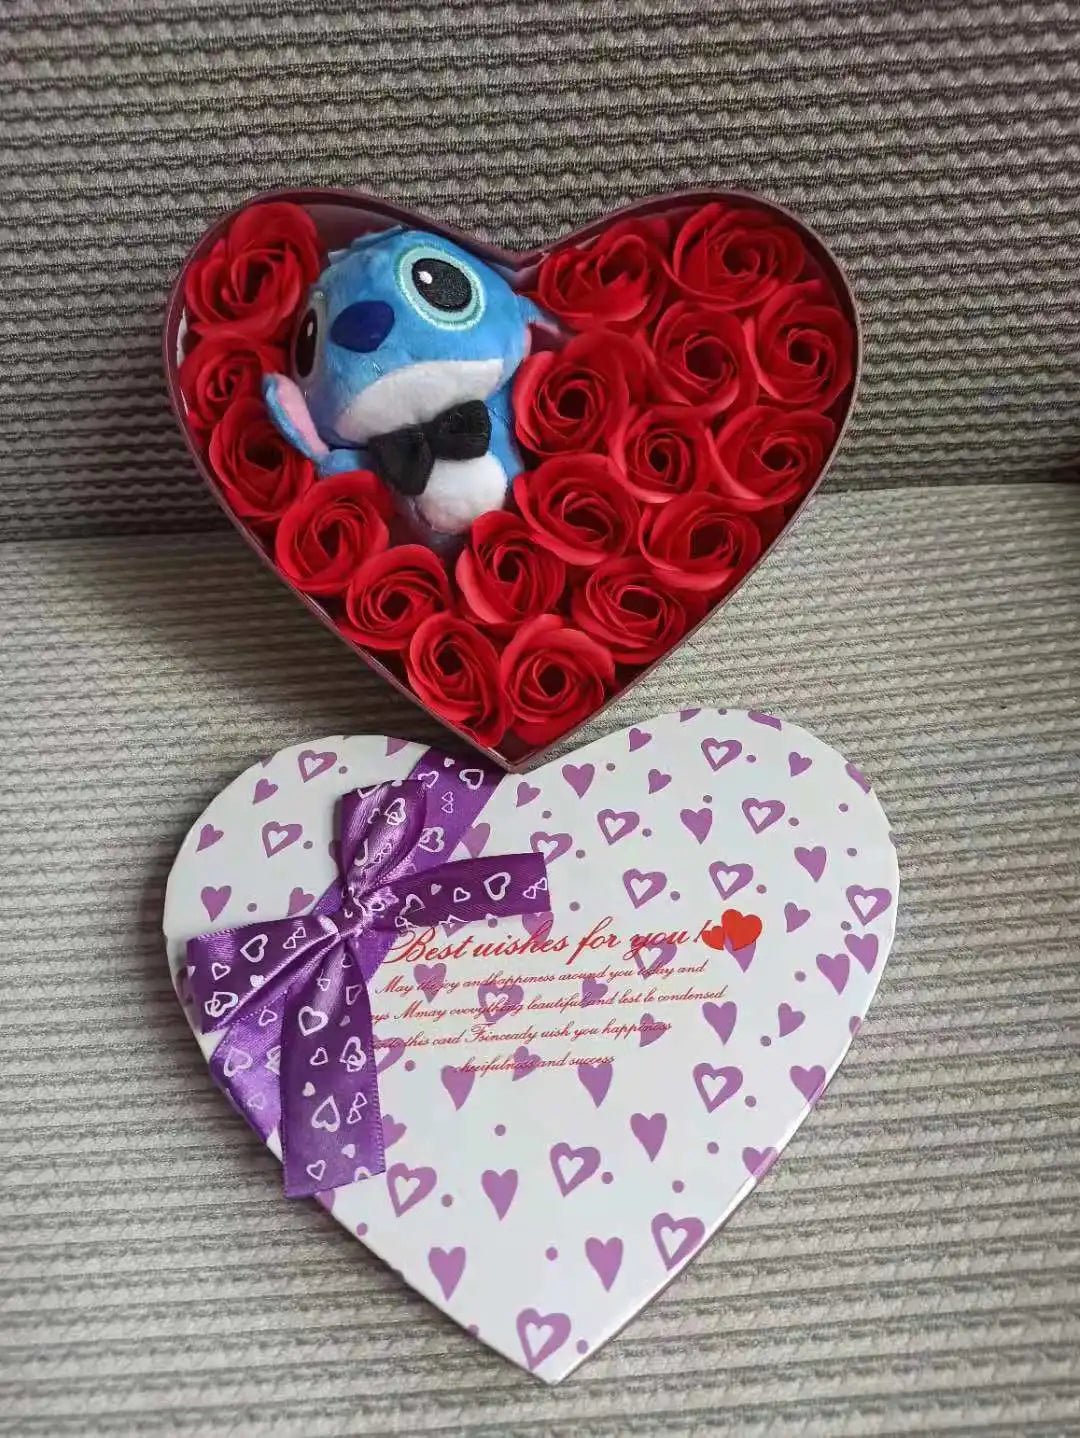 Disney's Stitch Plush Rose Bouquet Gift Box